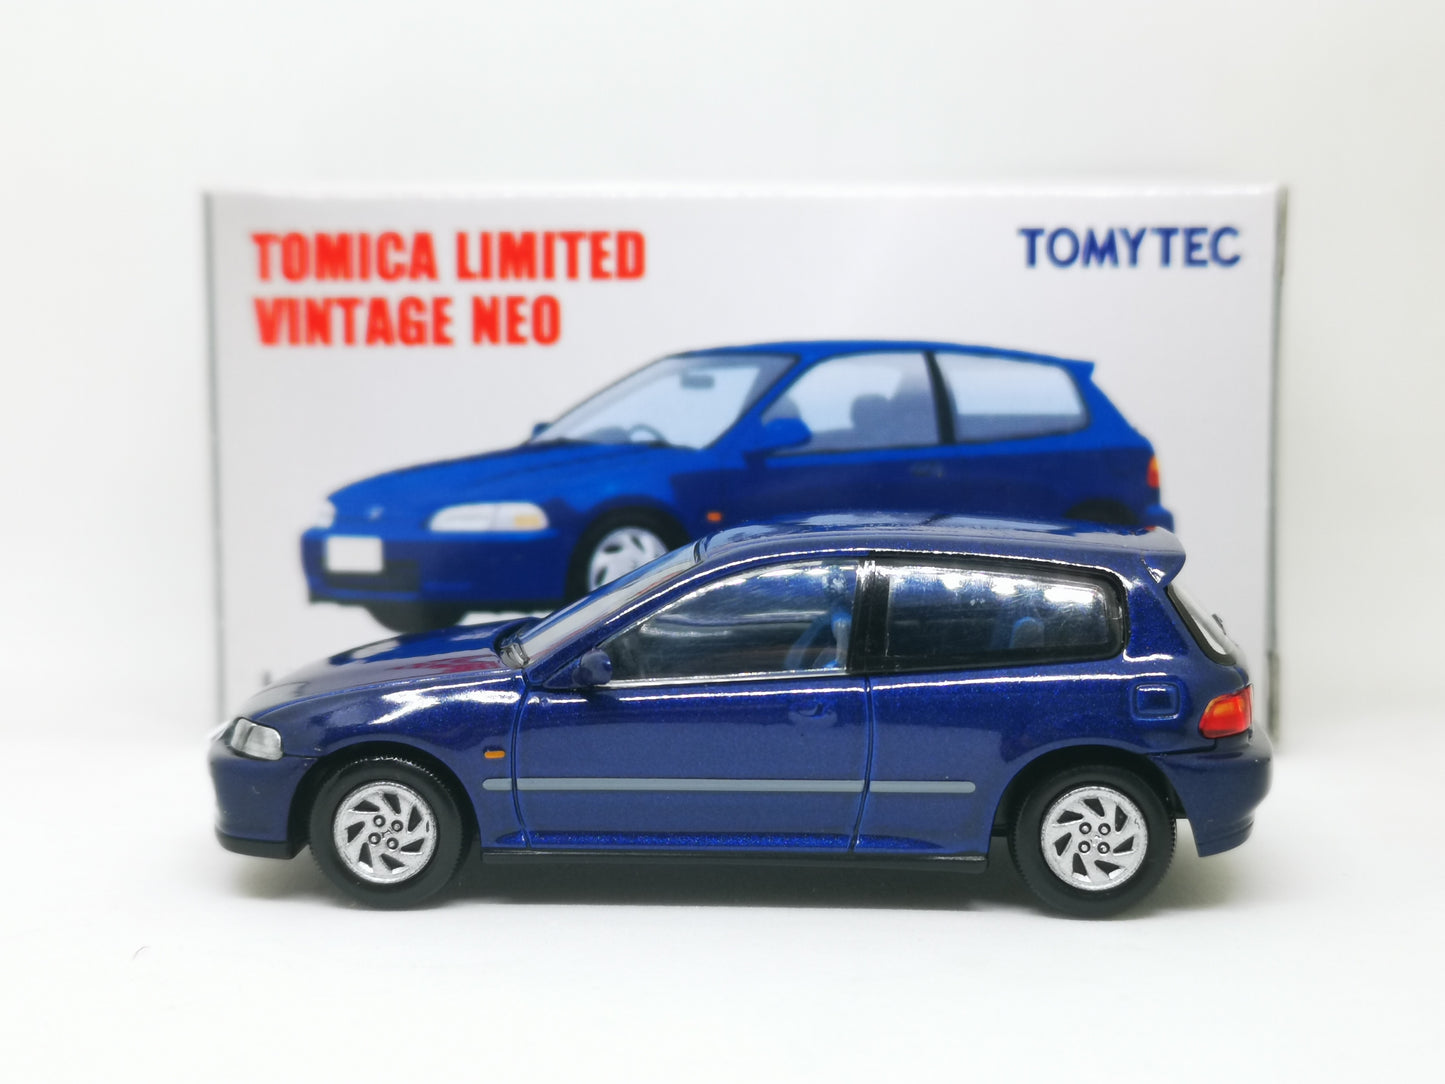 Tomica Limited Vintage Neo LV-N65b Honda Civic VTi EG6